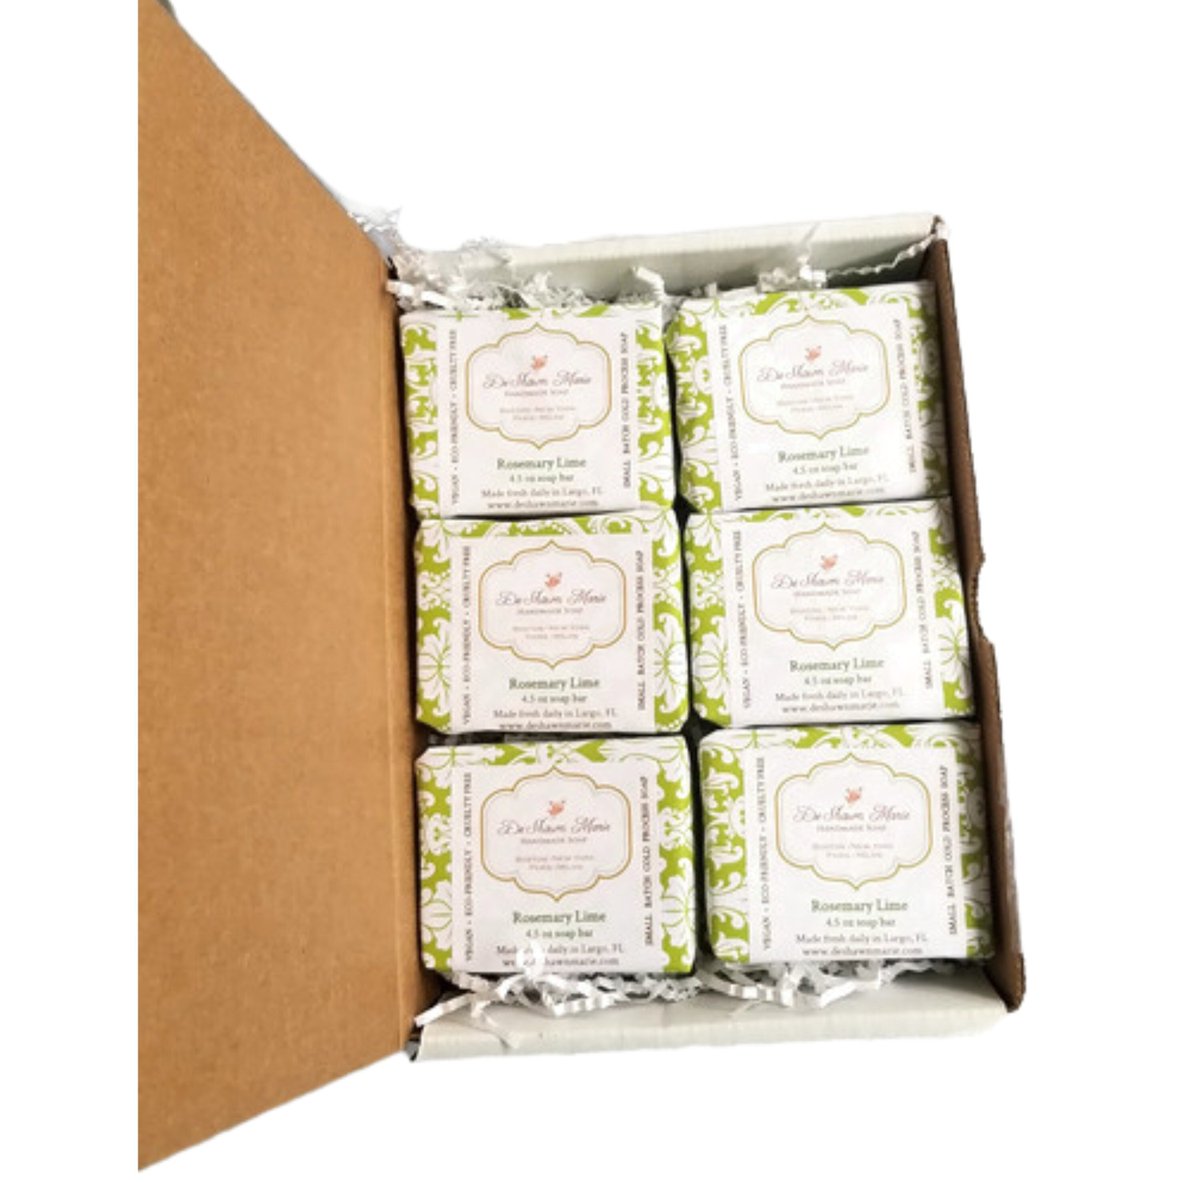 Rosemary Lime Soap Gift Box, Christmas Soap Gift, Soap Gift Set, Soap 6 pack, Vegan Soap Gift, Natural Soap Gift, Bath and Body Gift tuppu.net/966c6bb4 #Etsy #shopsmall #Christmasgifts #BathAndBodyGift